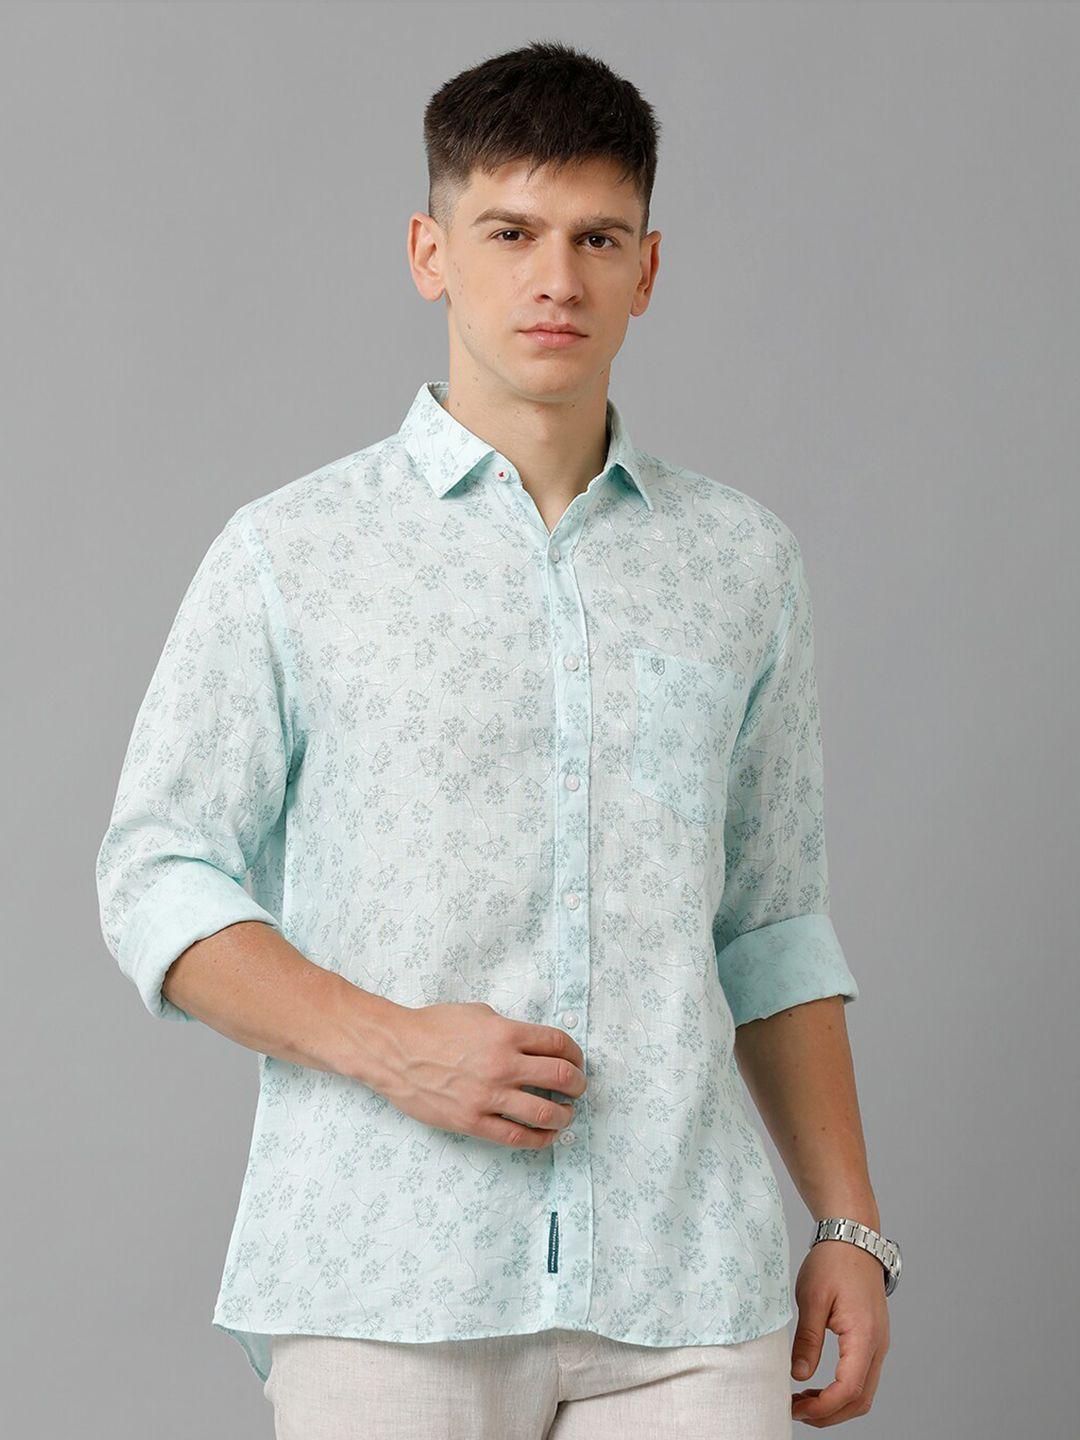 linen-club-floral-printed-spread-collar-linen-casual-shirt